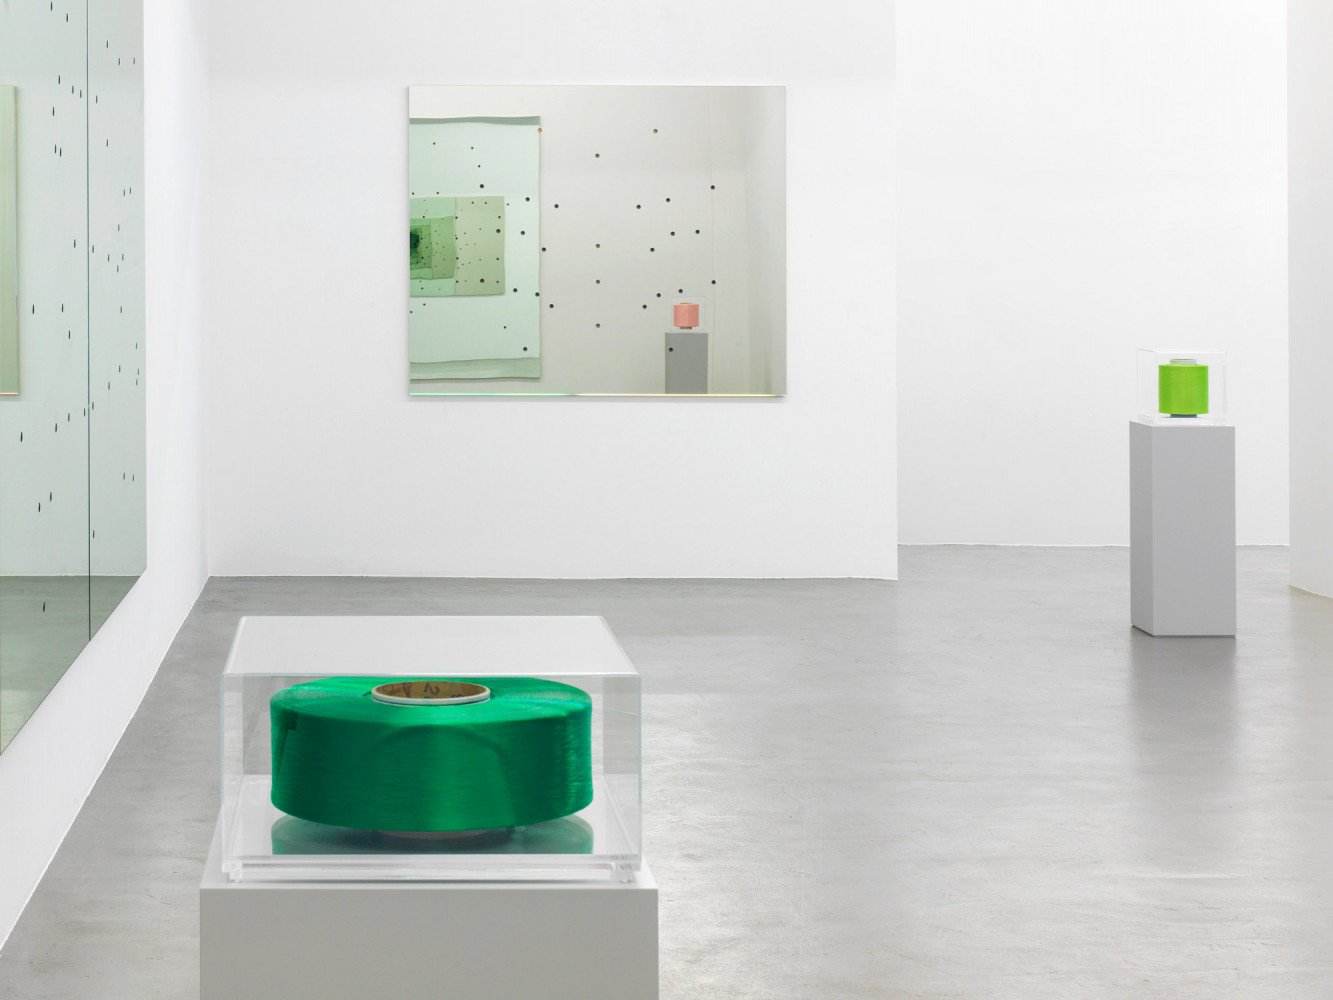 Alberto Garutti, ‘Là, Ora’, Installation view, Buchmann Galerie